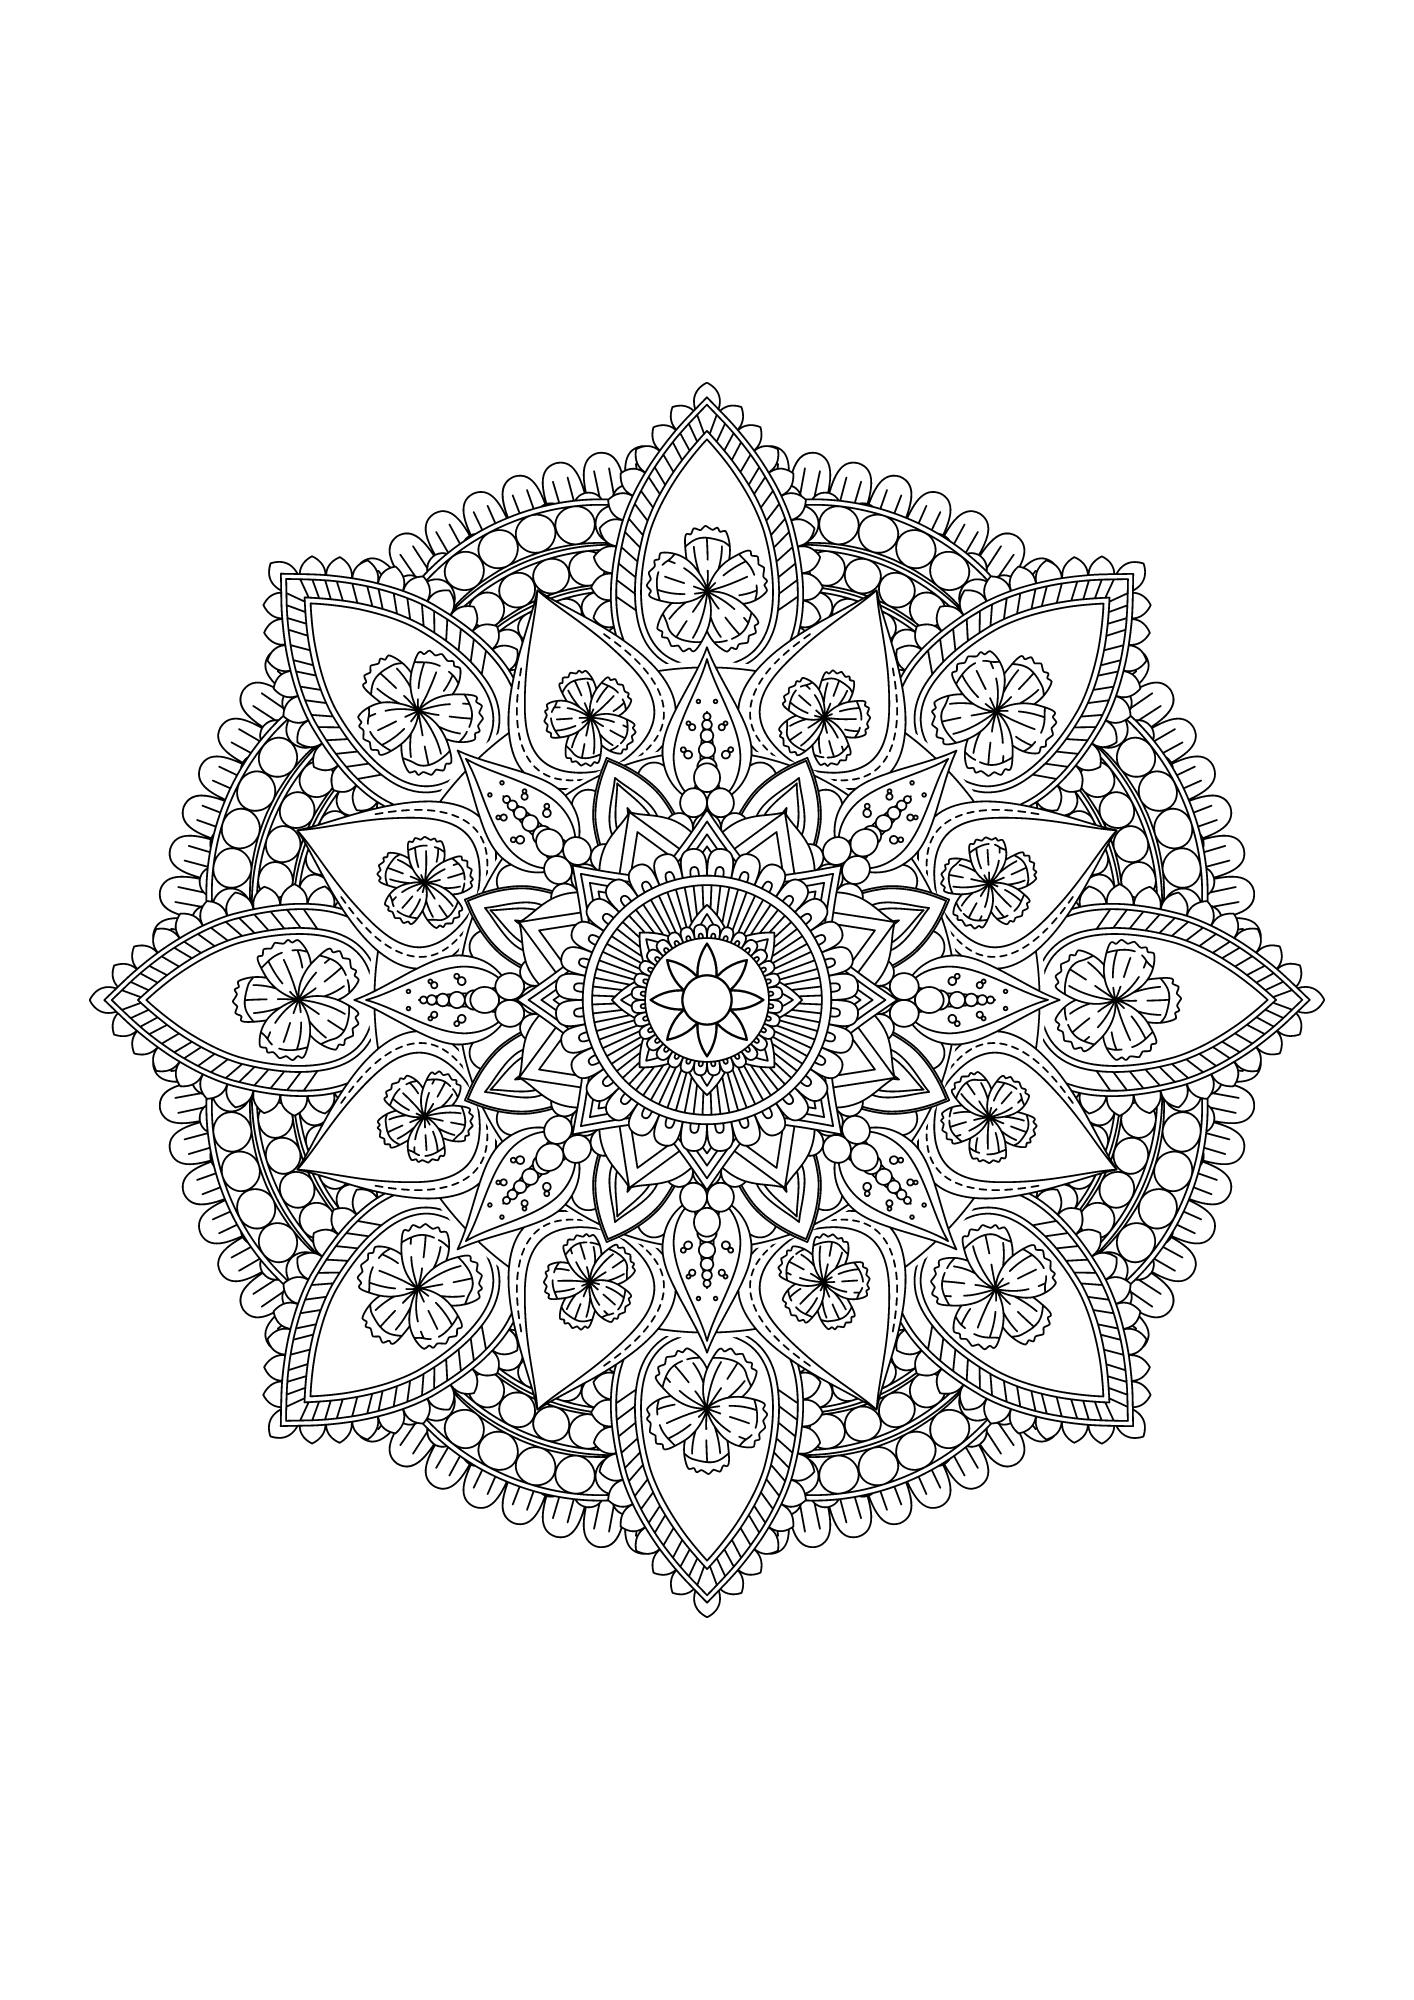 Flower-shaped Mandala PDF